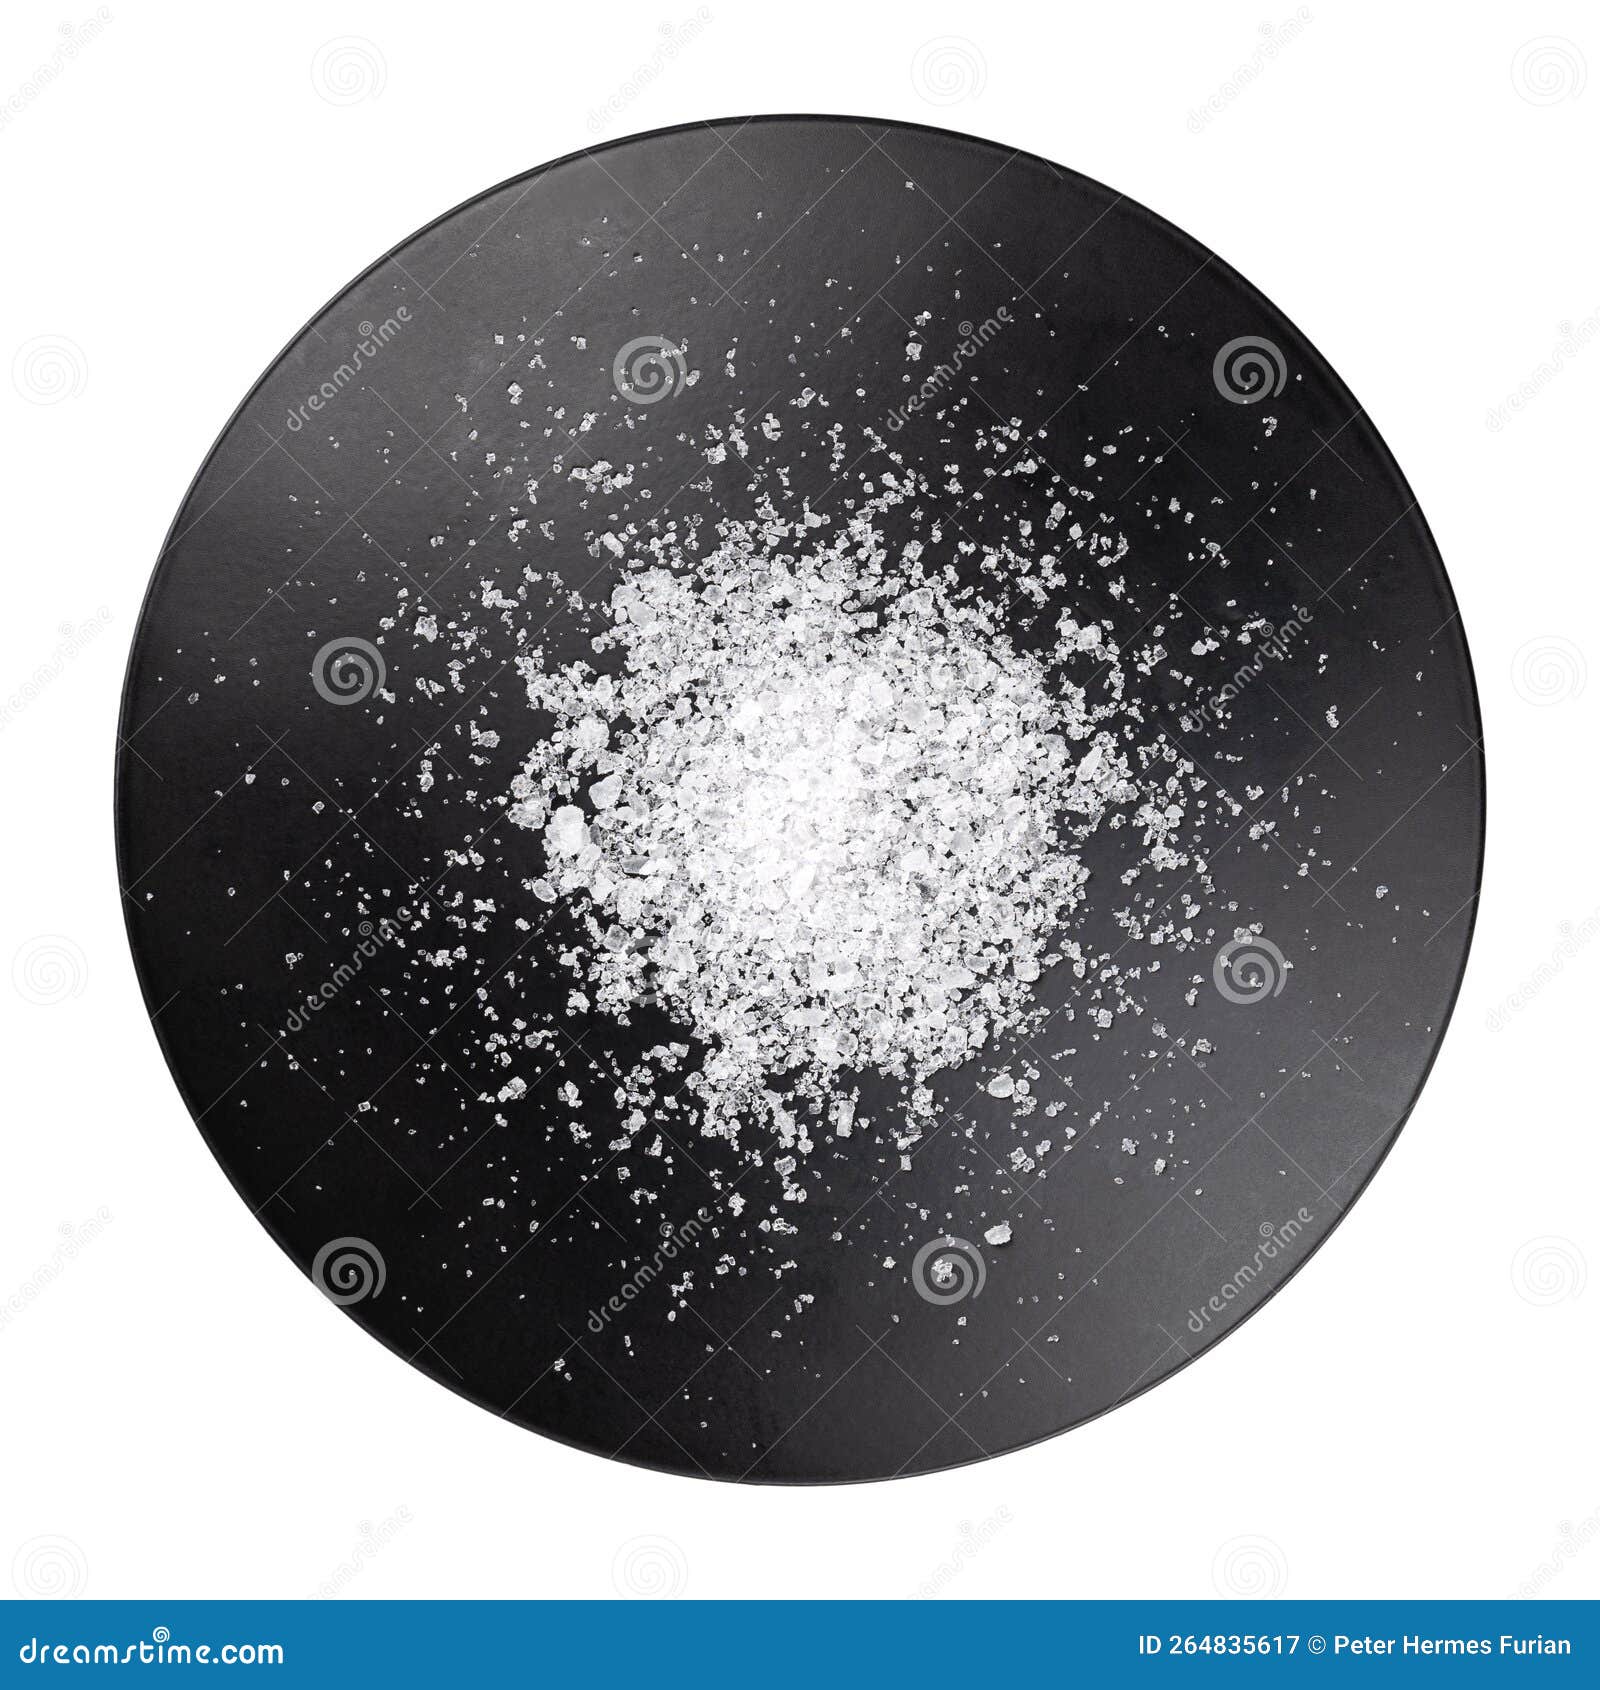 sea salt, fleur de sel, flor de sal, in a flat black bowl